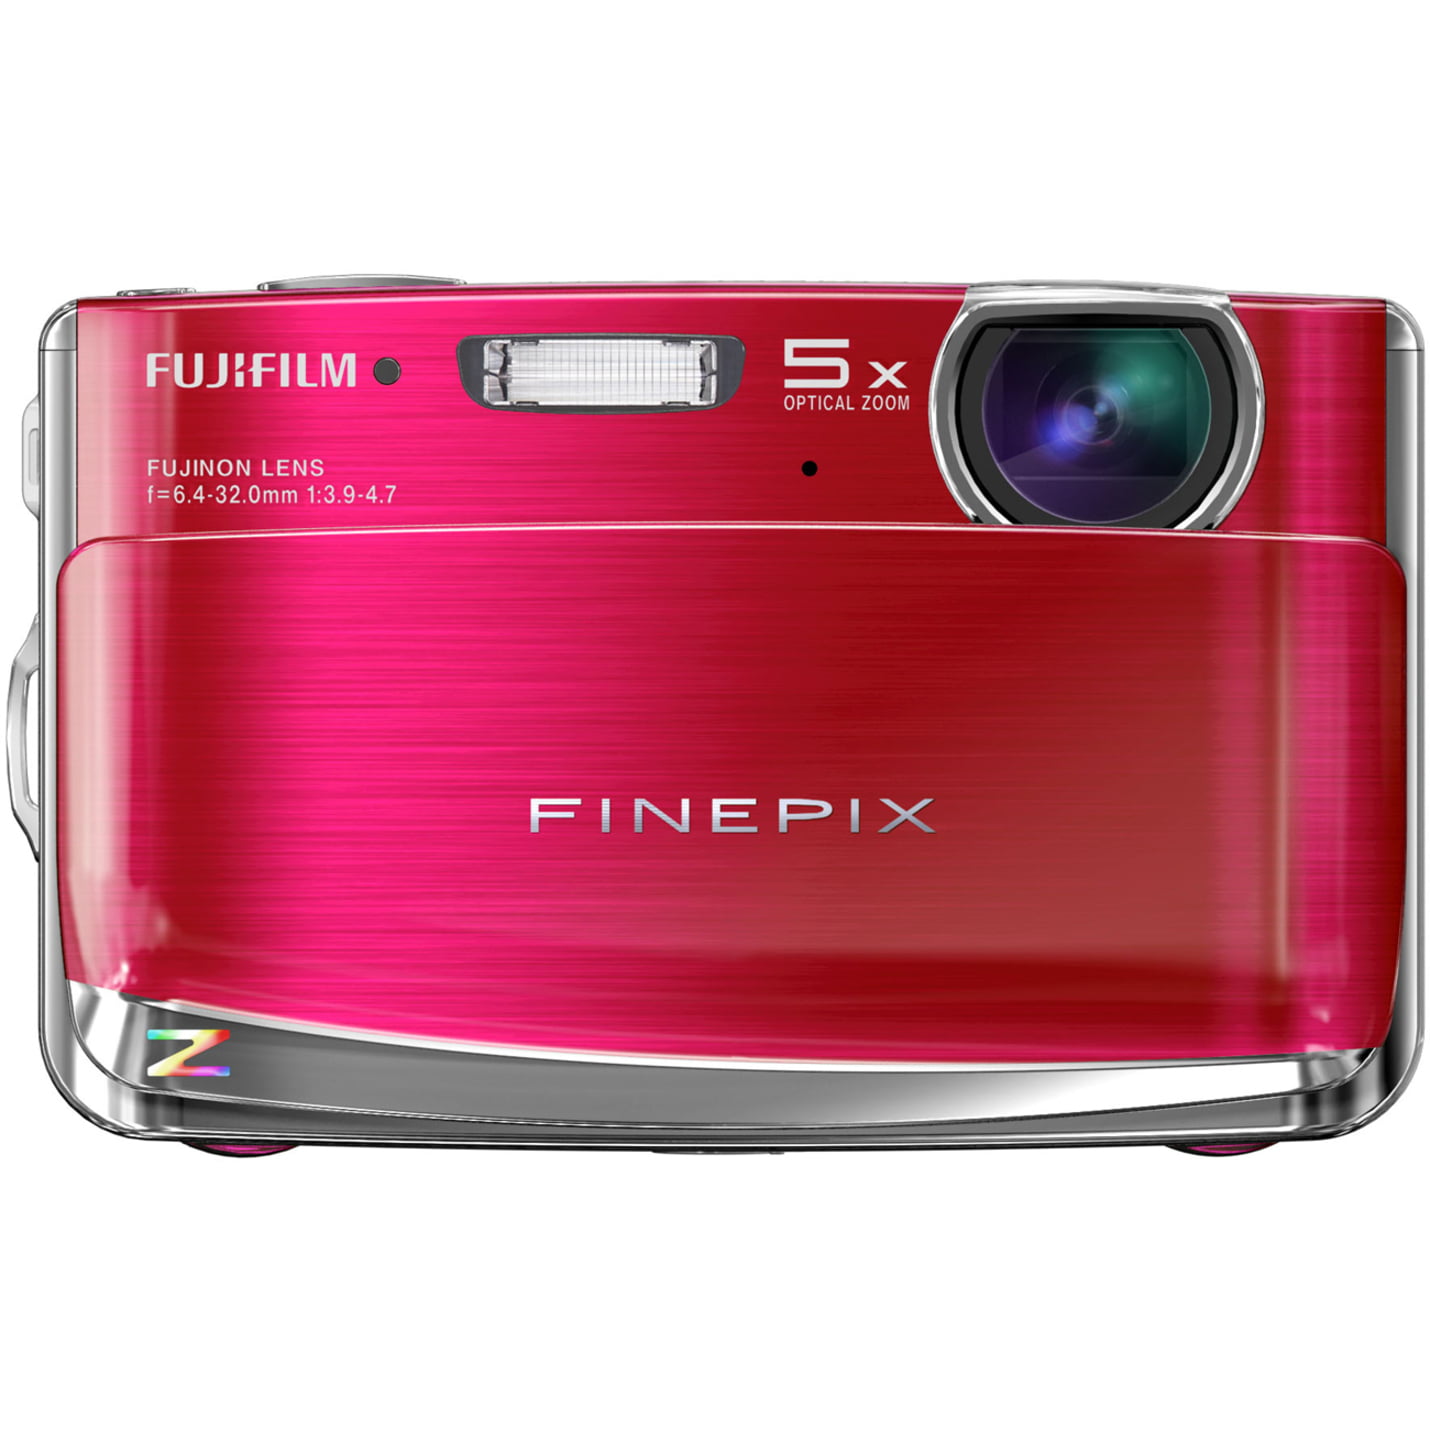 Fortaleza freír Descuido Fujifilm FinePix Z70 12.2 Megapixel Compact Camera, Raspberry Red -  Walmart.com